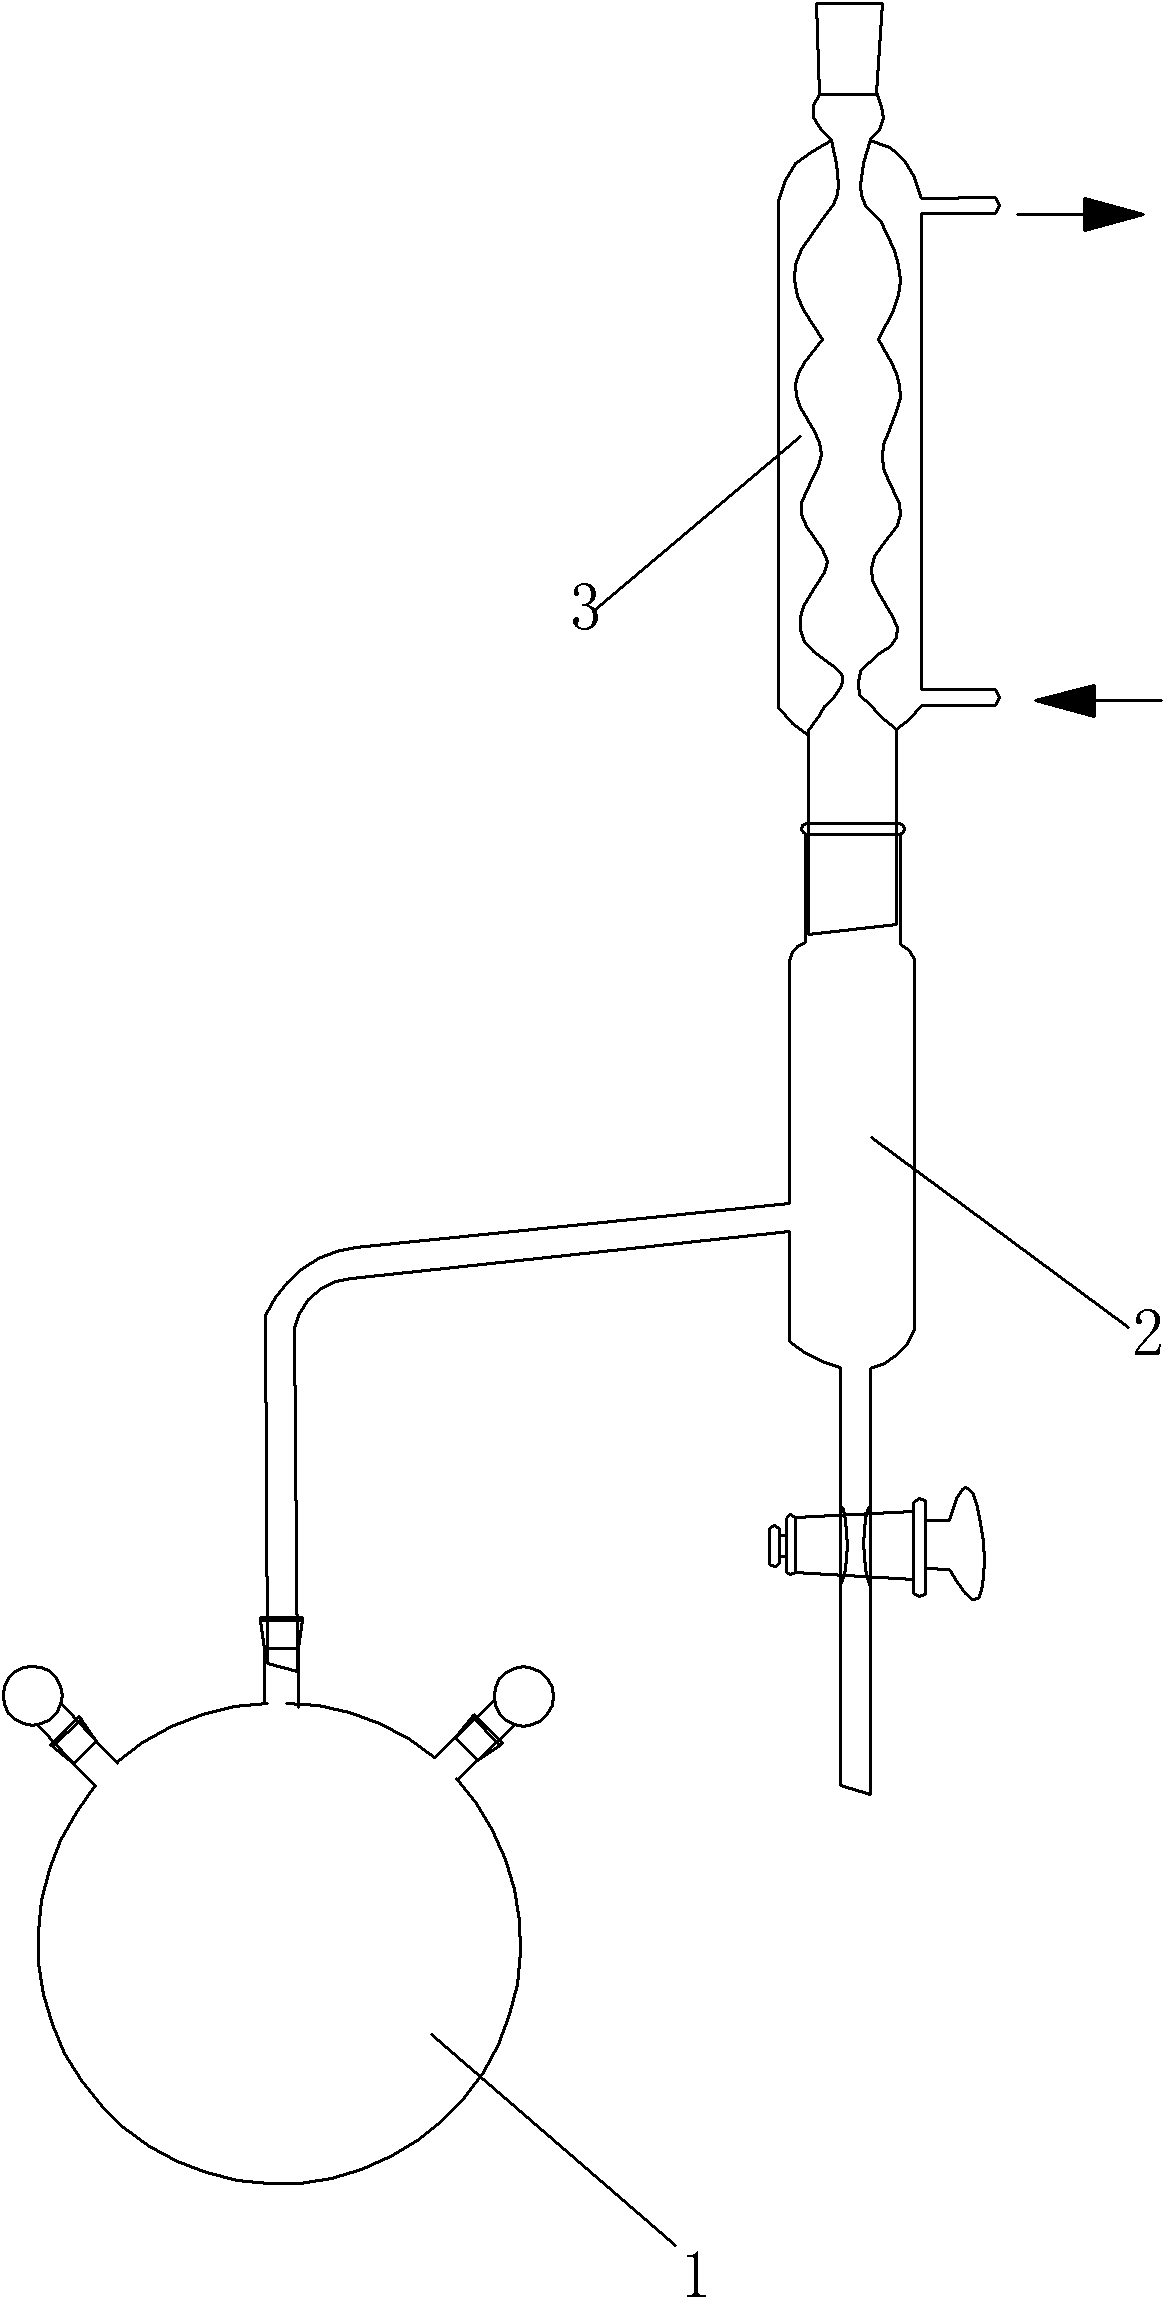 Method for preparing p-fluoro anisole